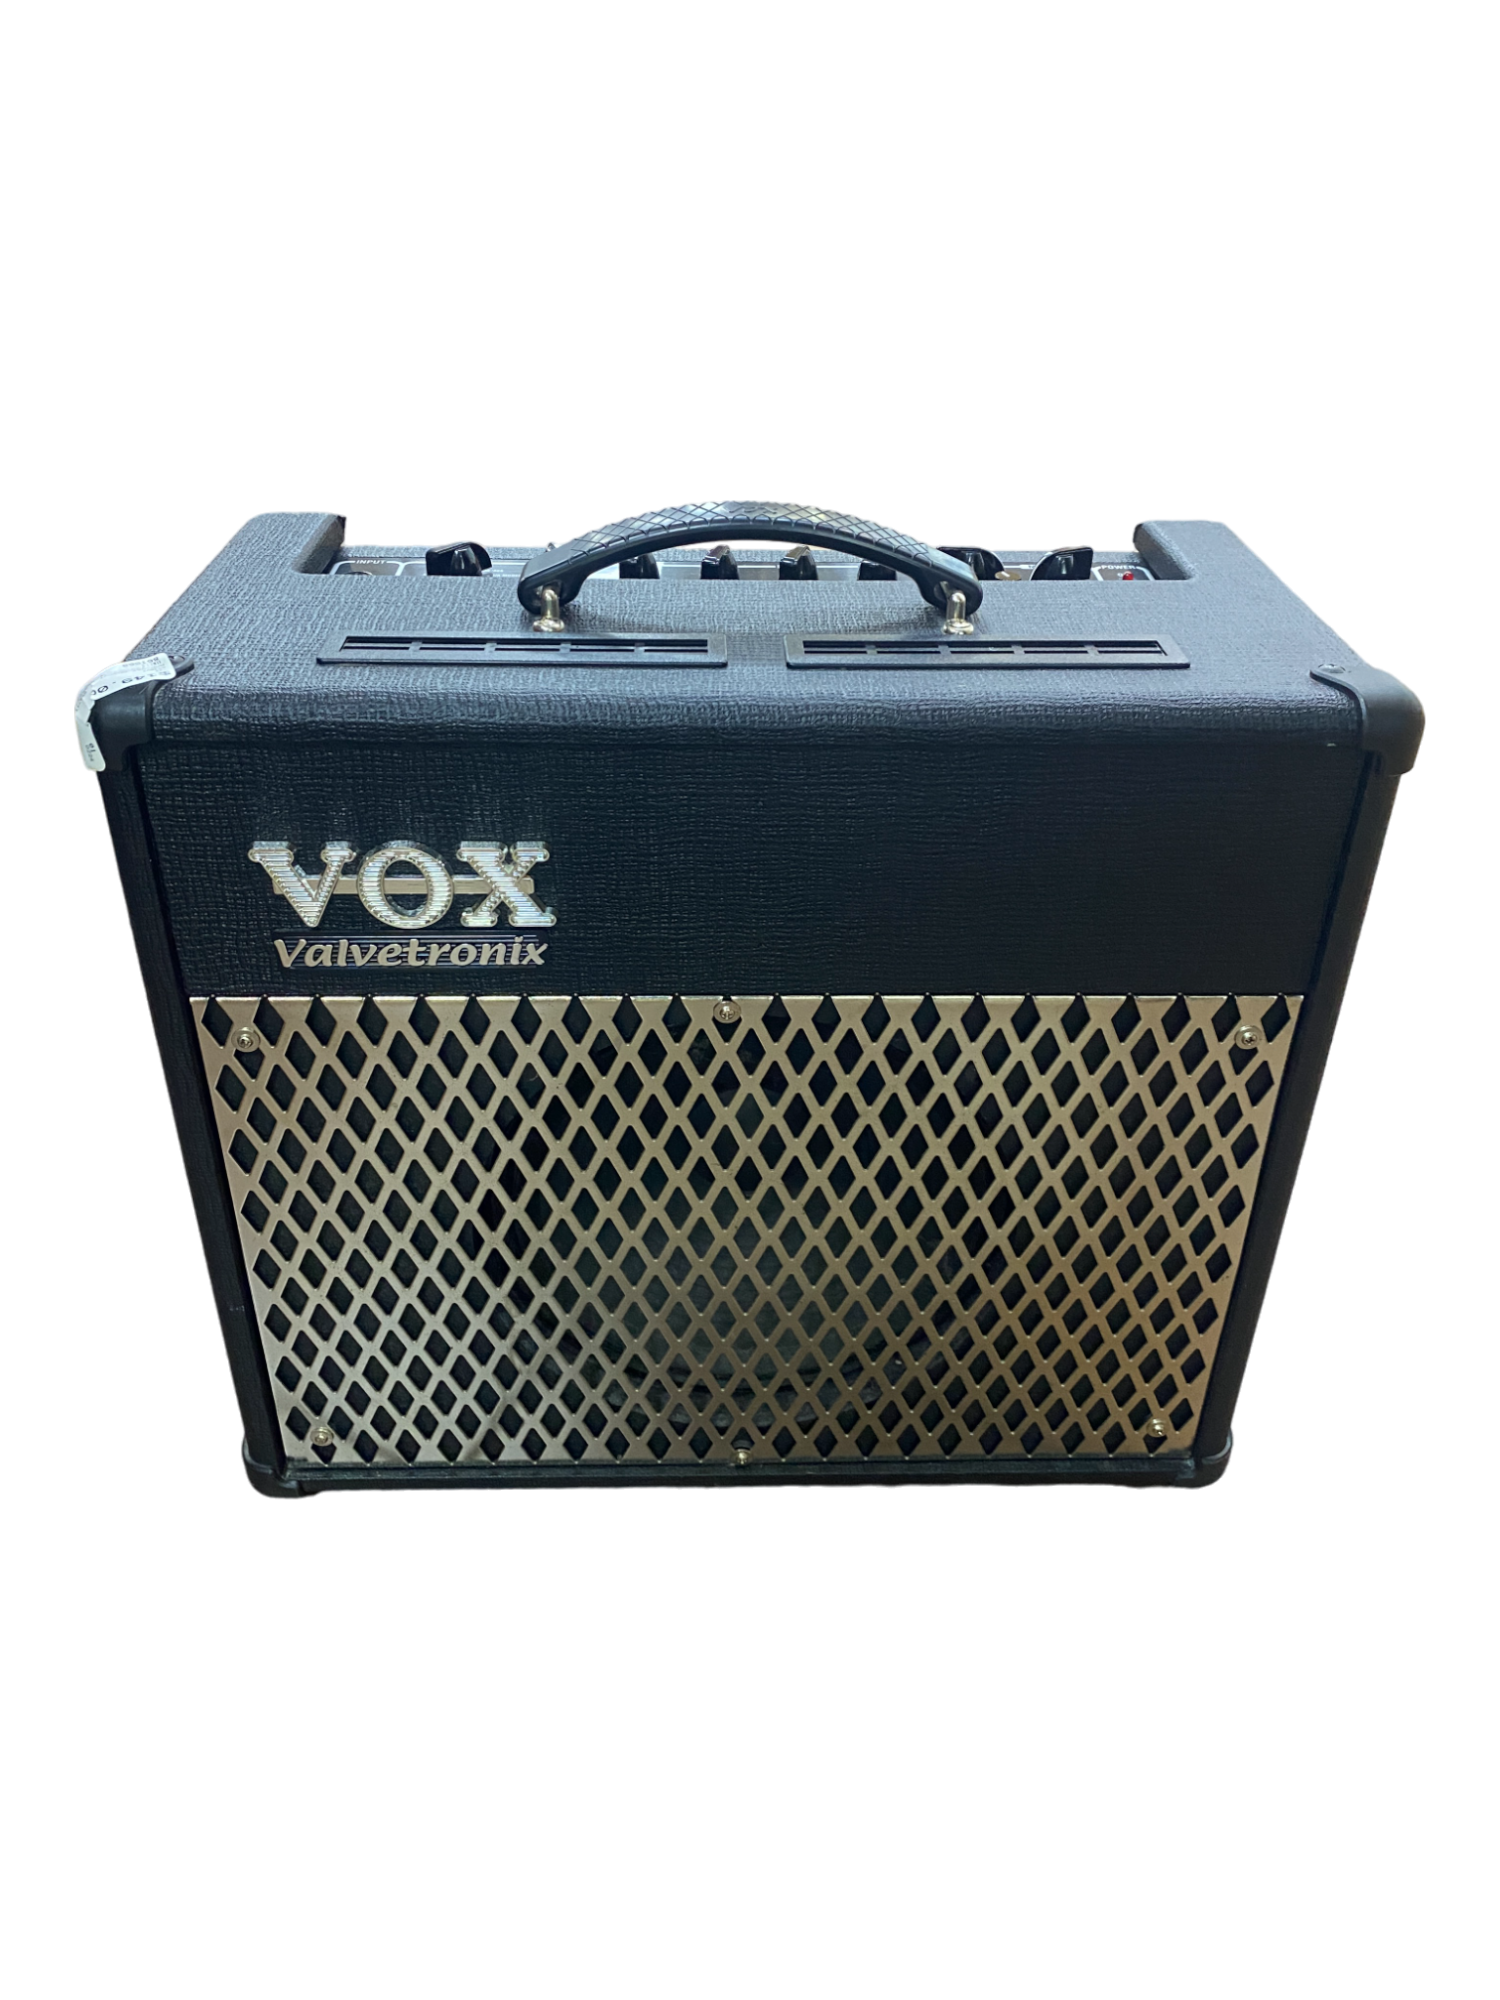 VOX Valvetronix VT20X Modeling Amplifier